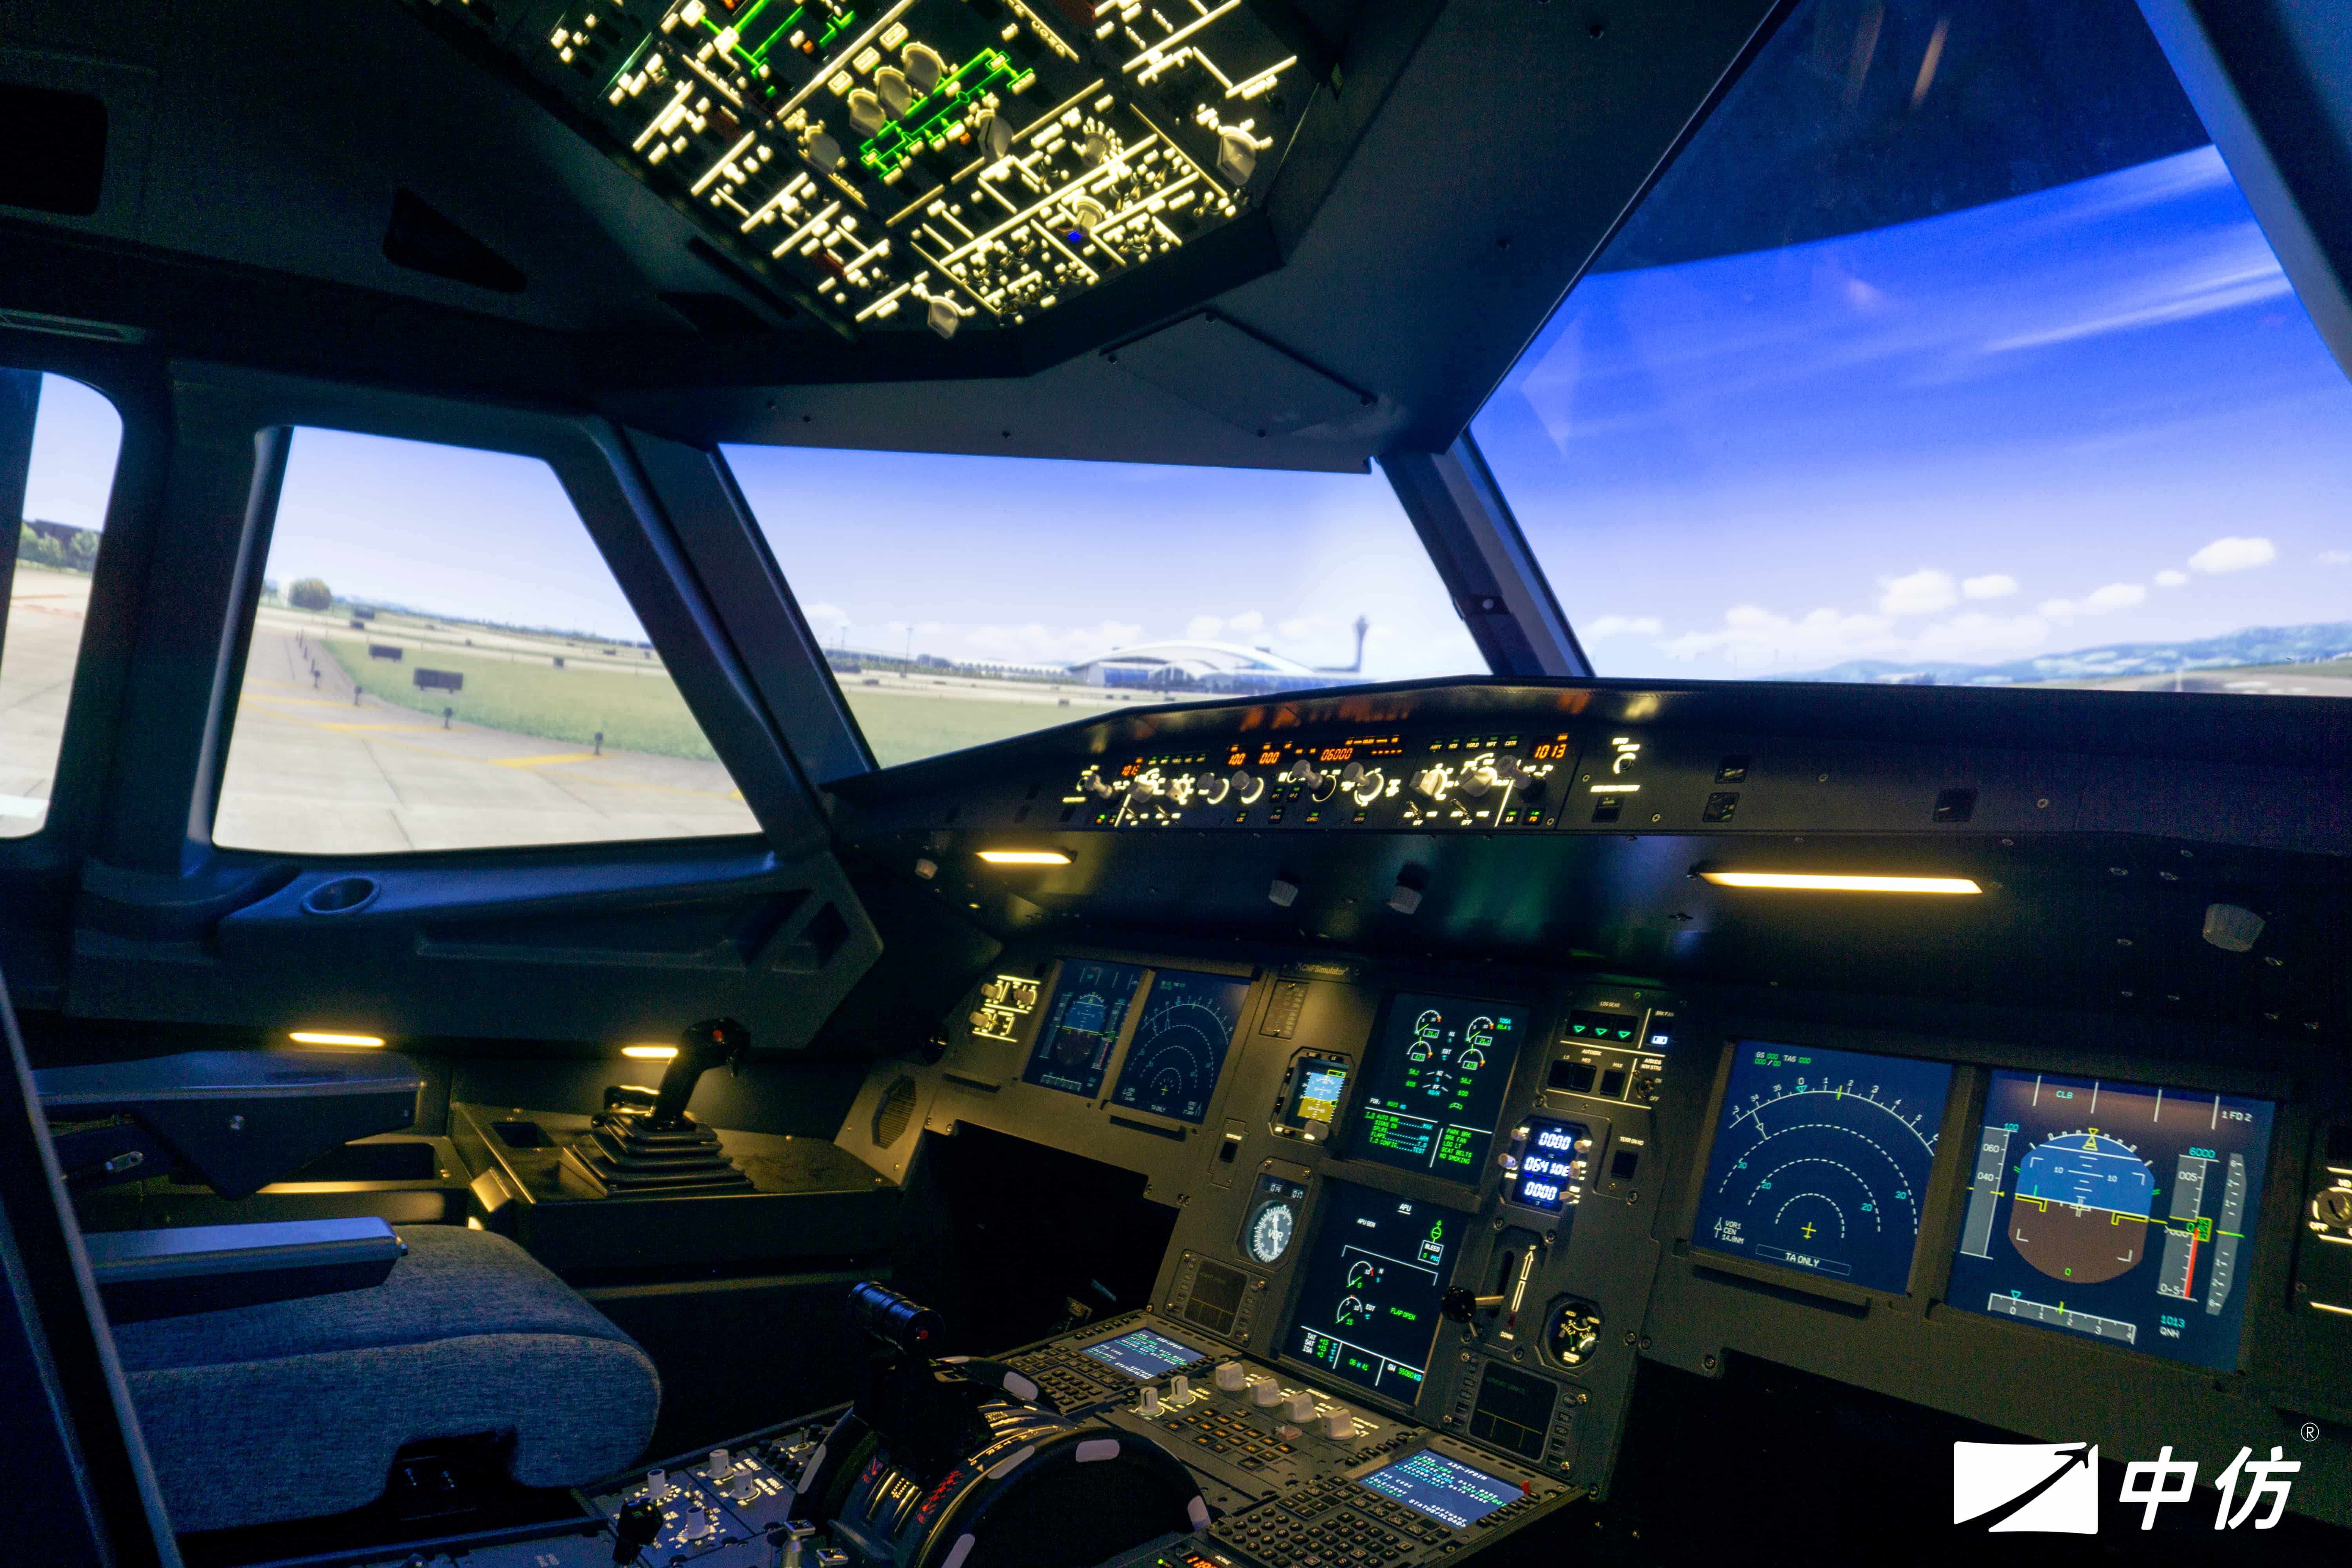 CnTech Airbus A320 flight simulator